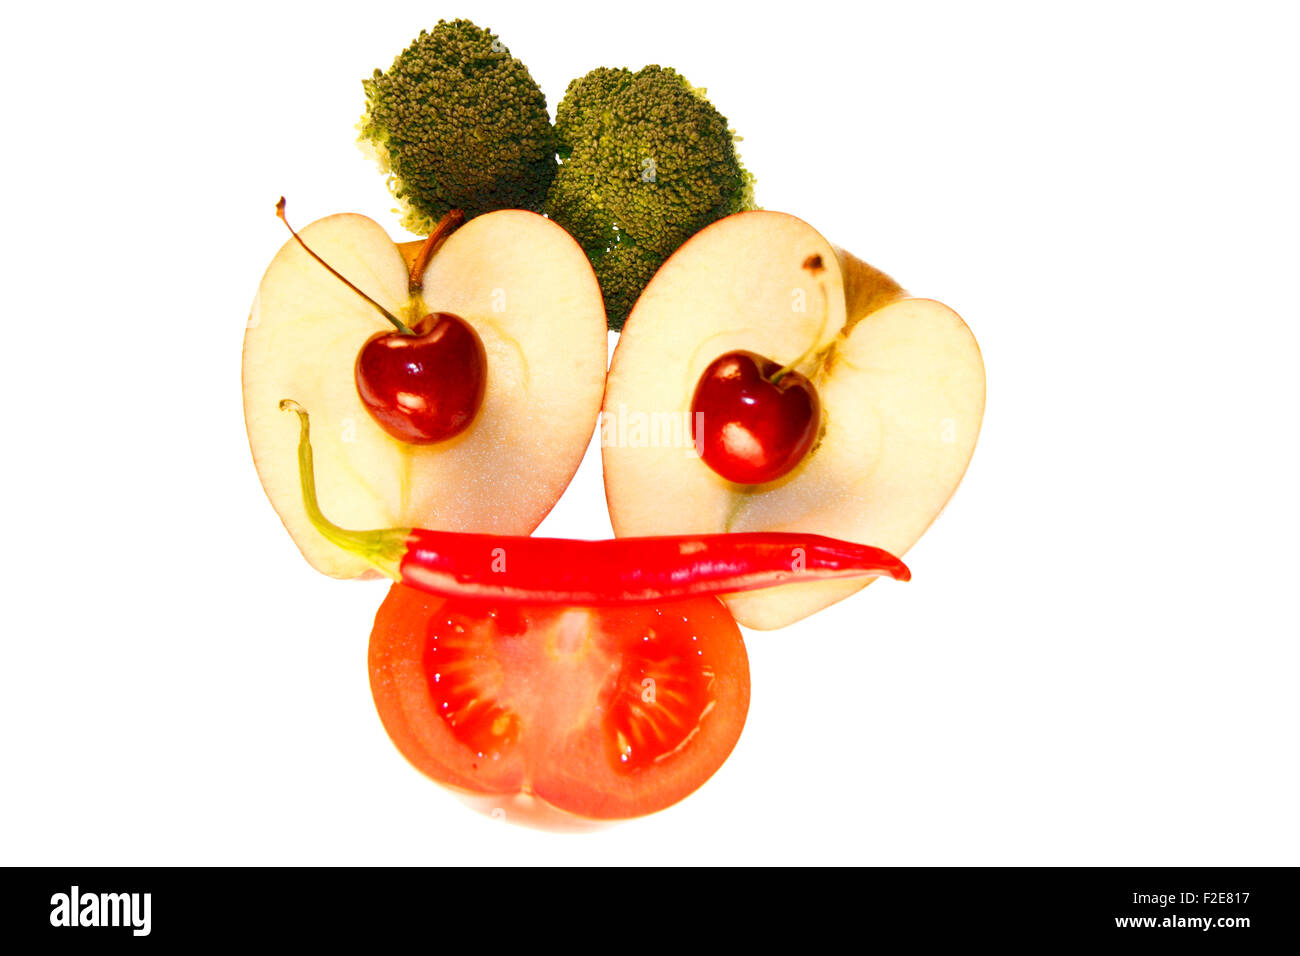 On / Gesicht: Kirschen, Apfel, Tomate, Brokkoli, Chilly - Symbolbild Nahrungsmittel. Stockfoto